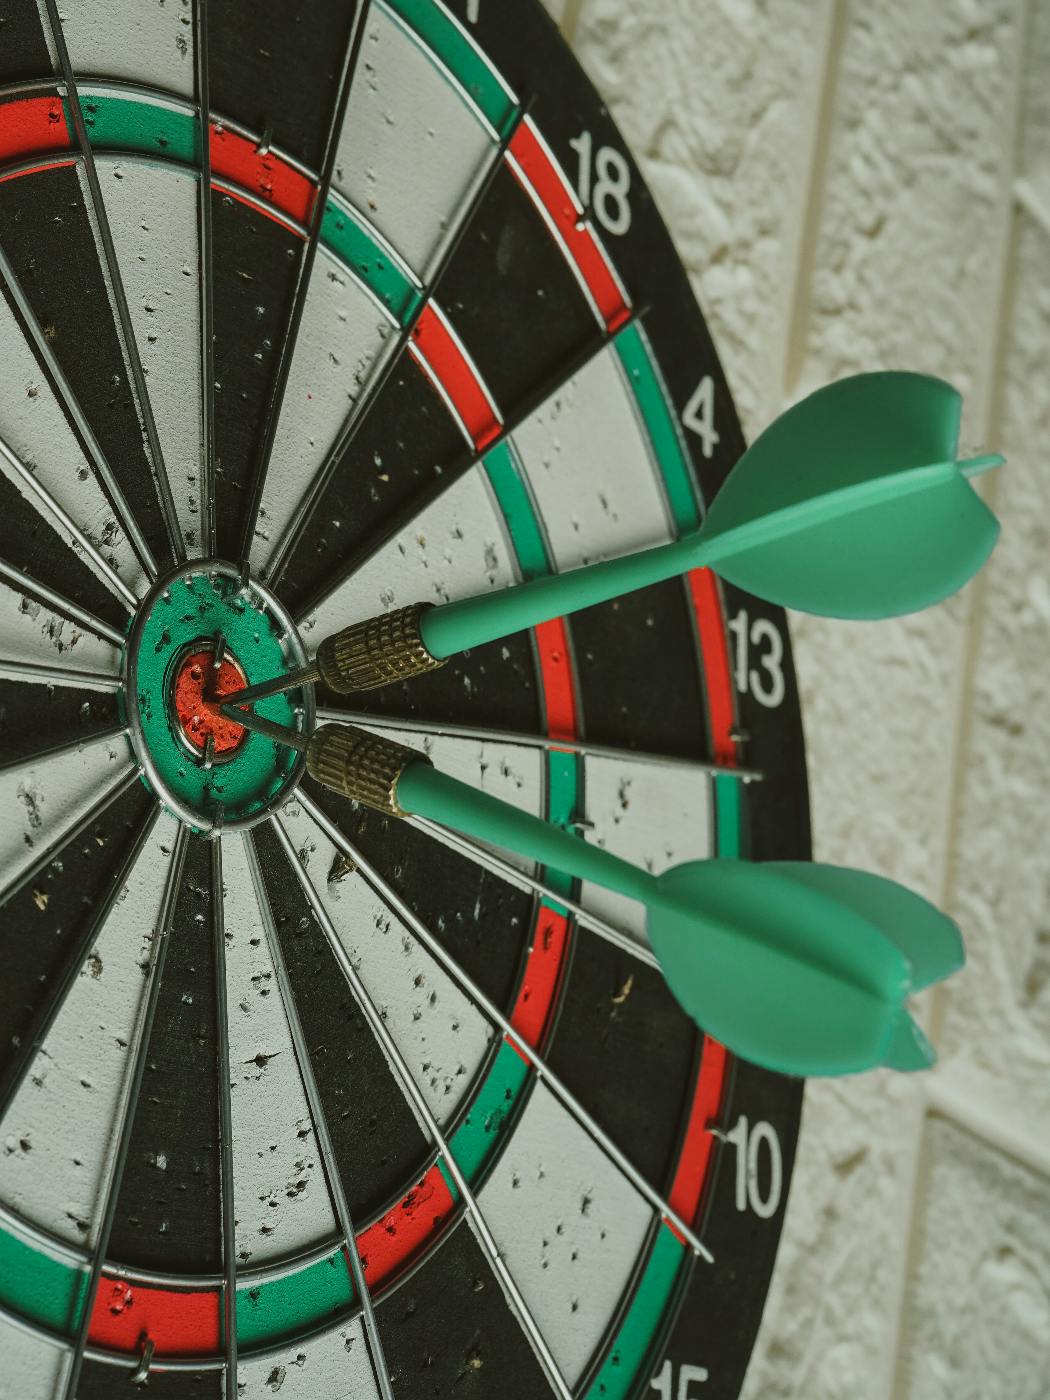 A dart board with two green darts in the bulls eye